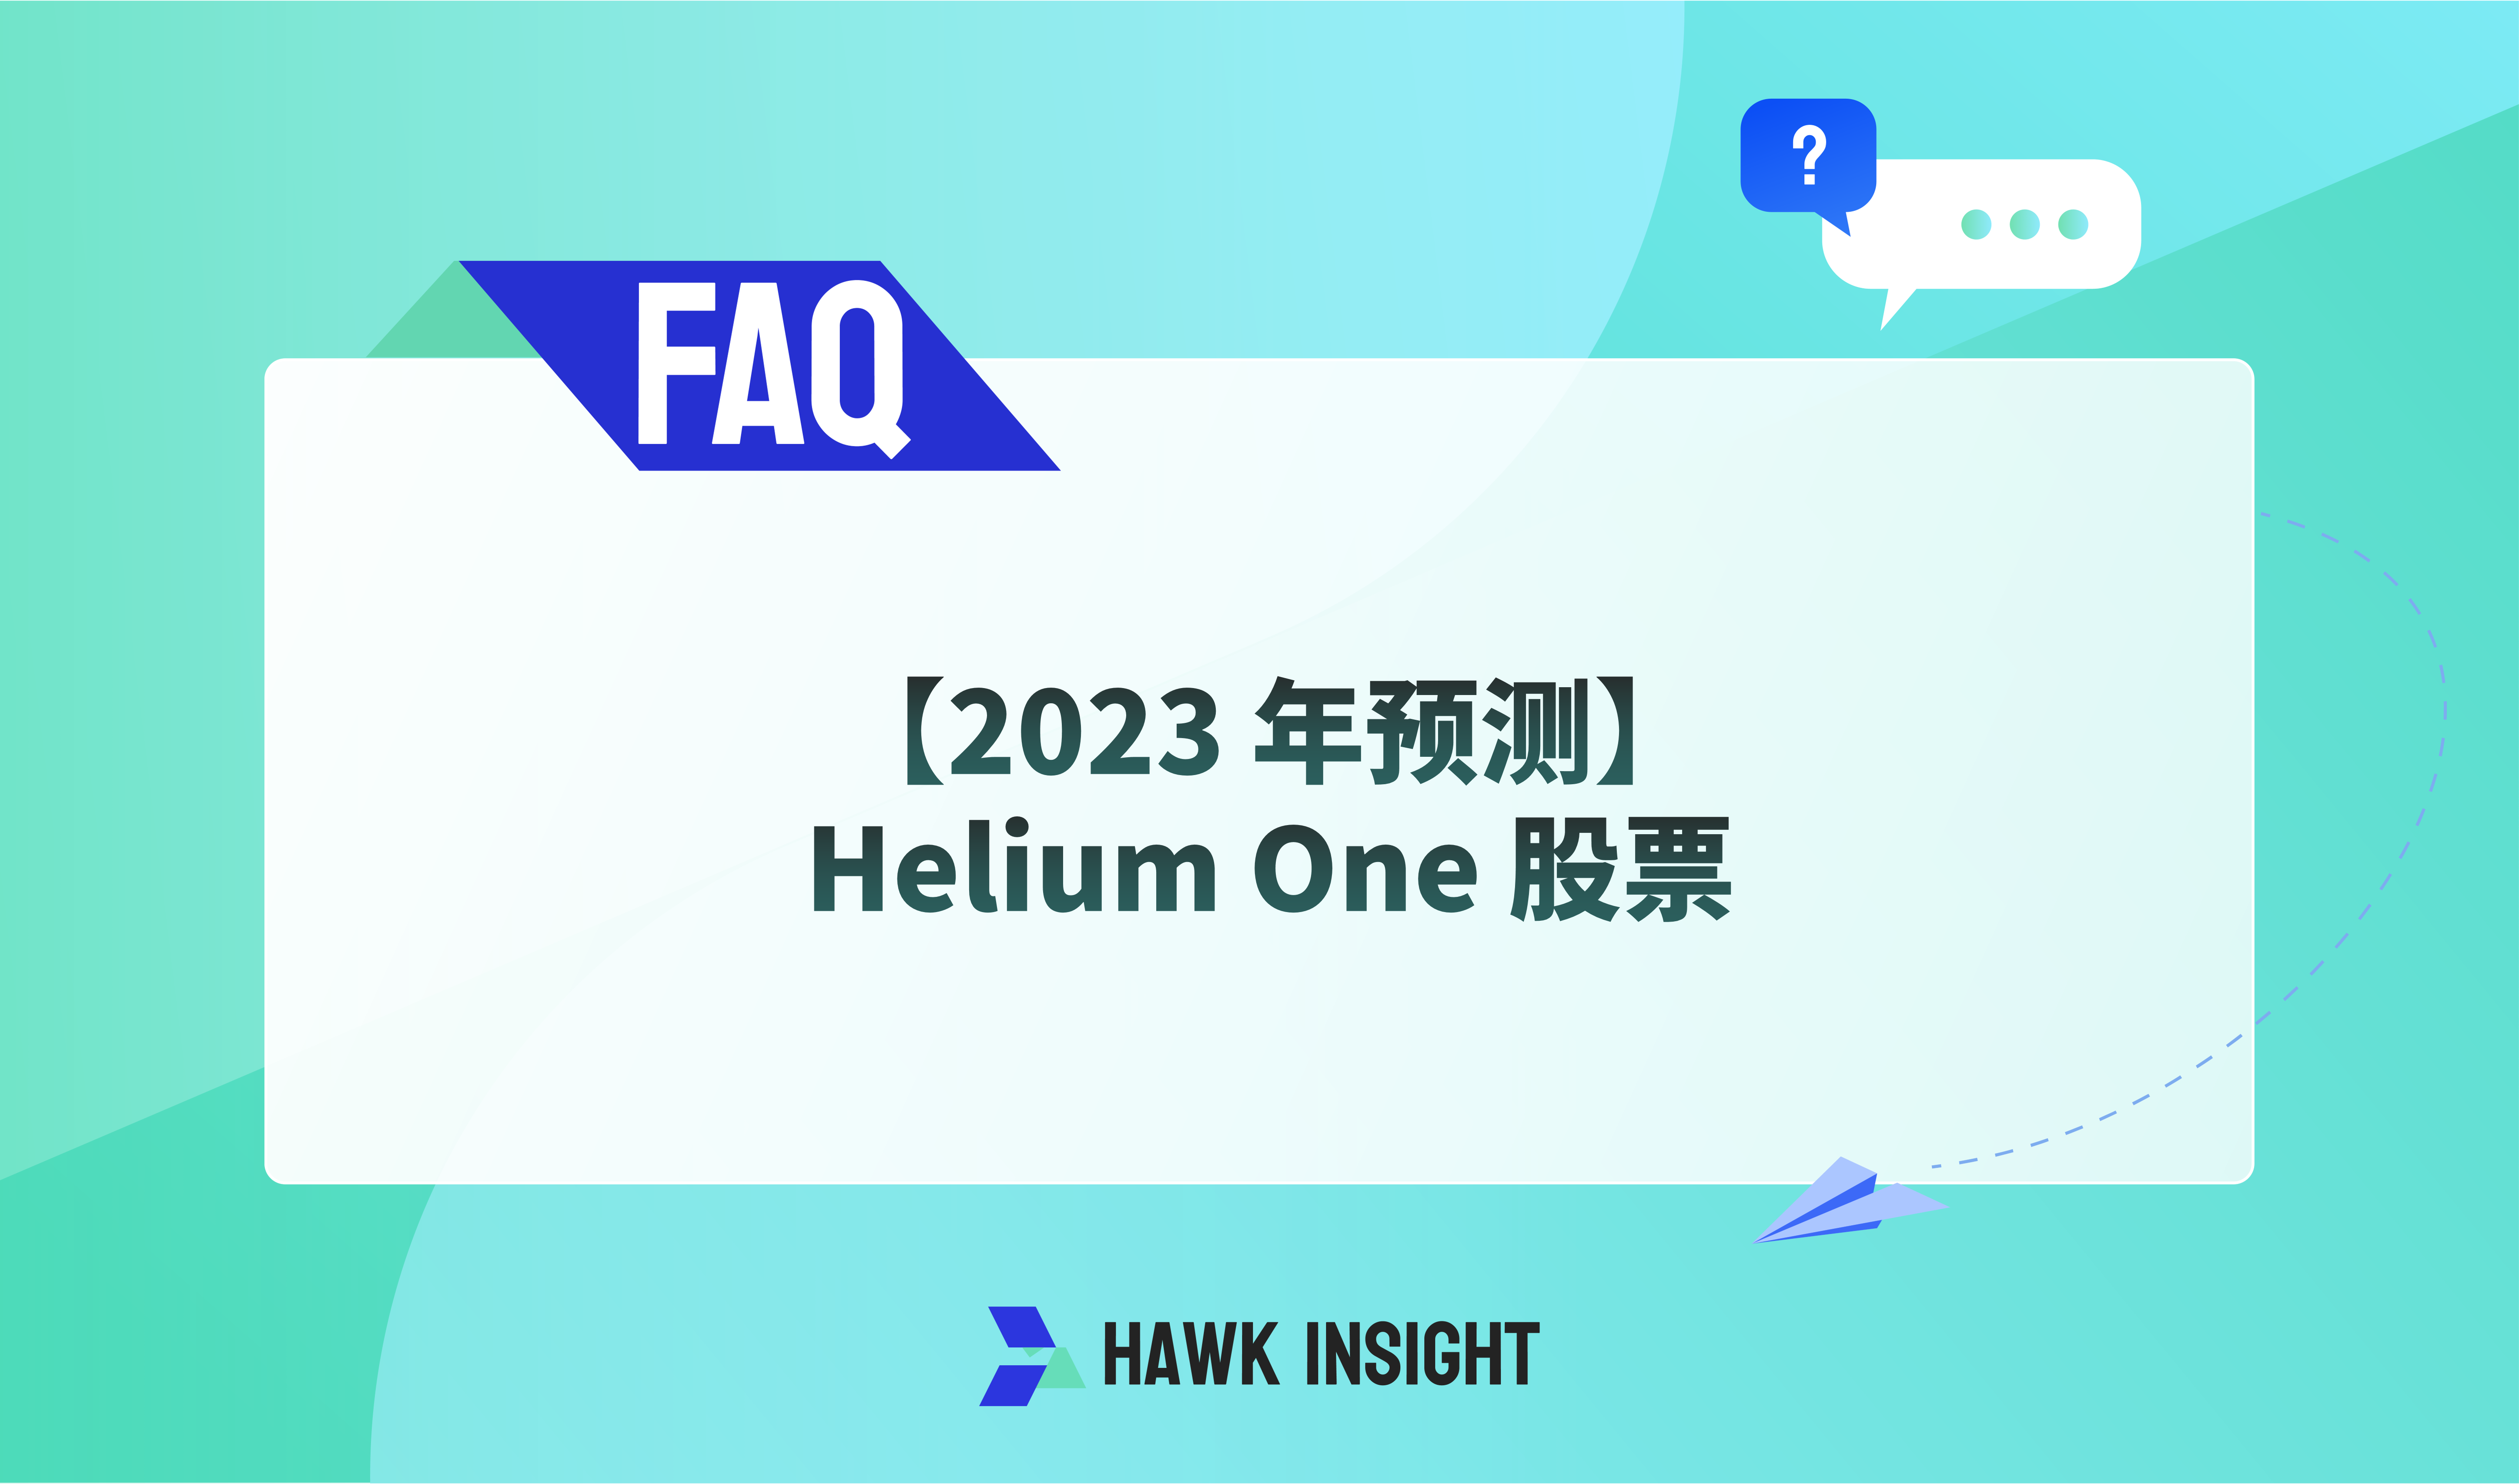 [2023 Forecast] Helium One Stock